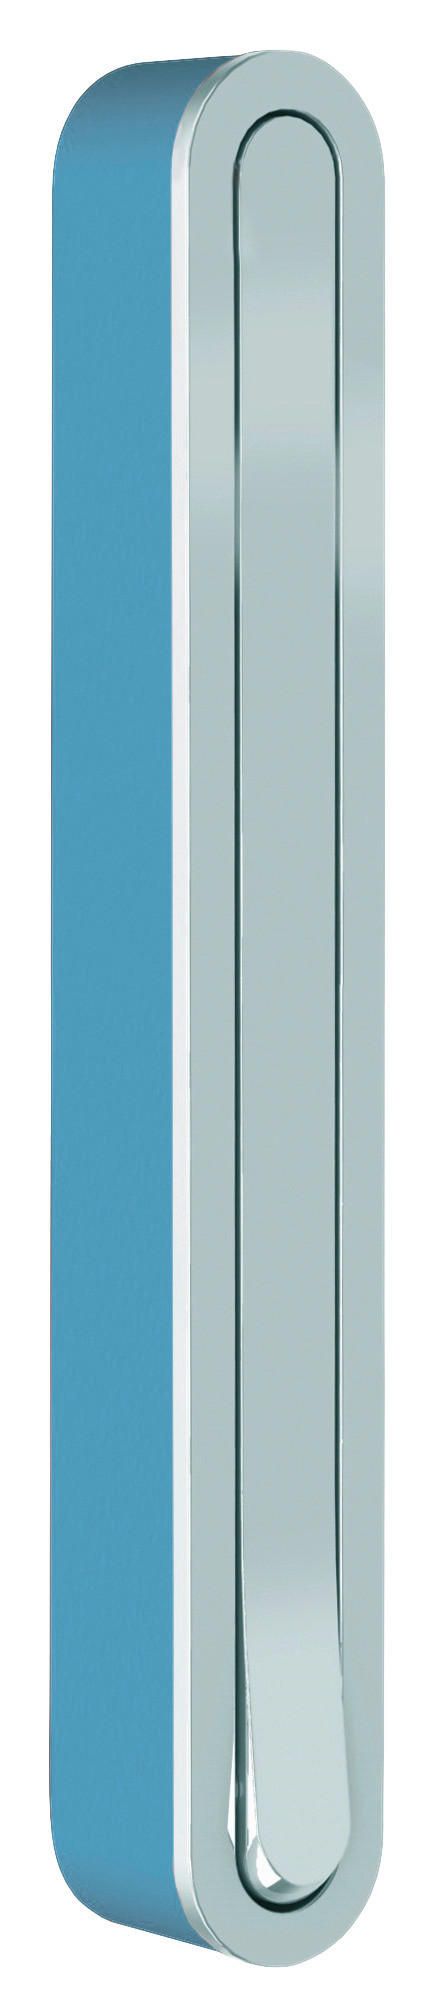 WANDHAKEN Blau, Silberfarben  - Blau/Silberfarben, Design, Kunststoff/Metall (2,1/16/2,1-15,6cm)